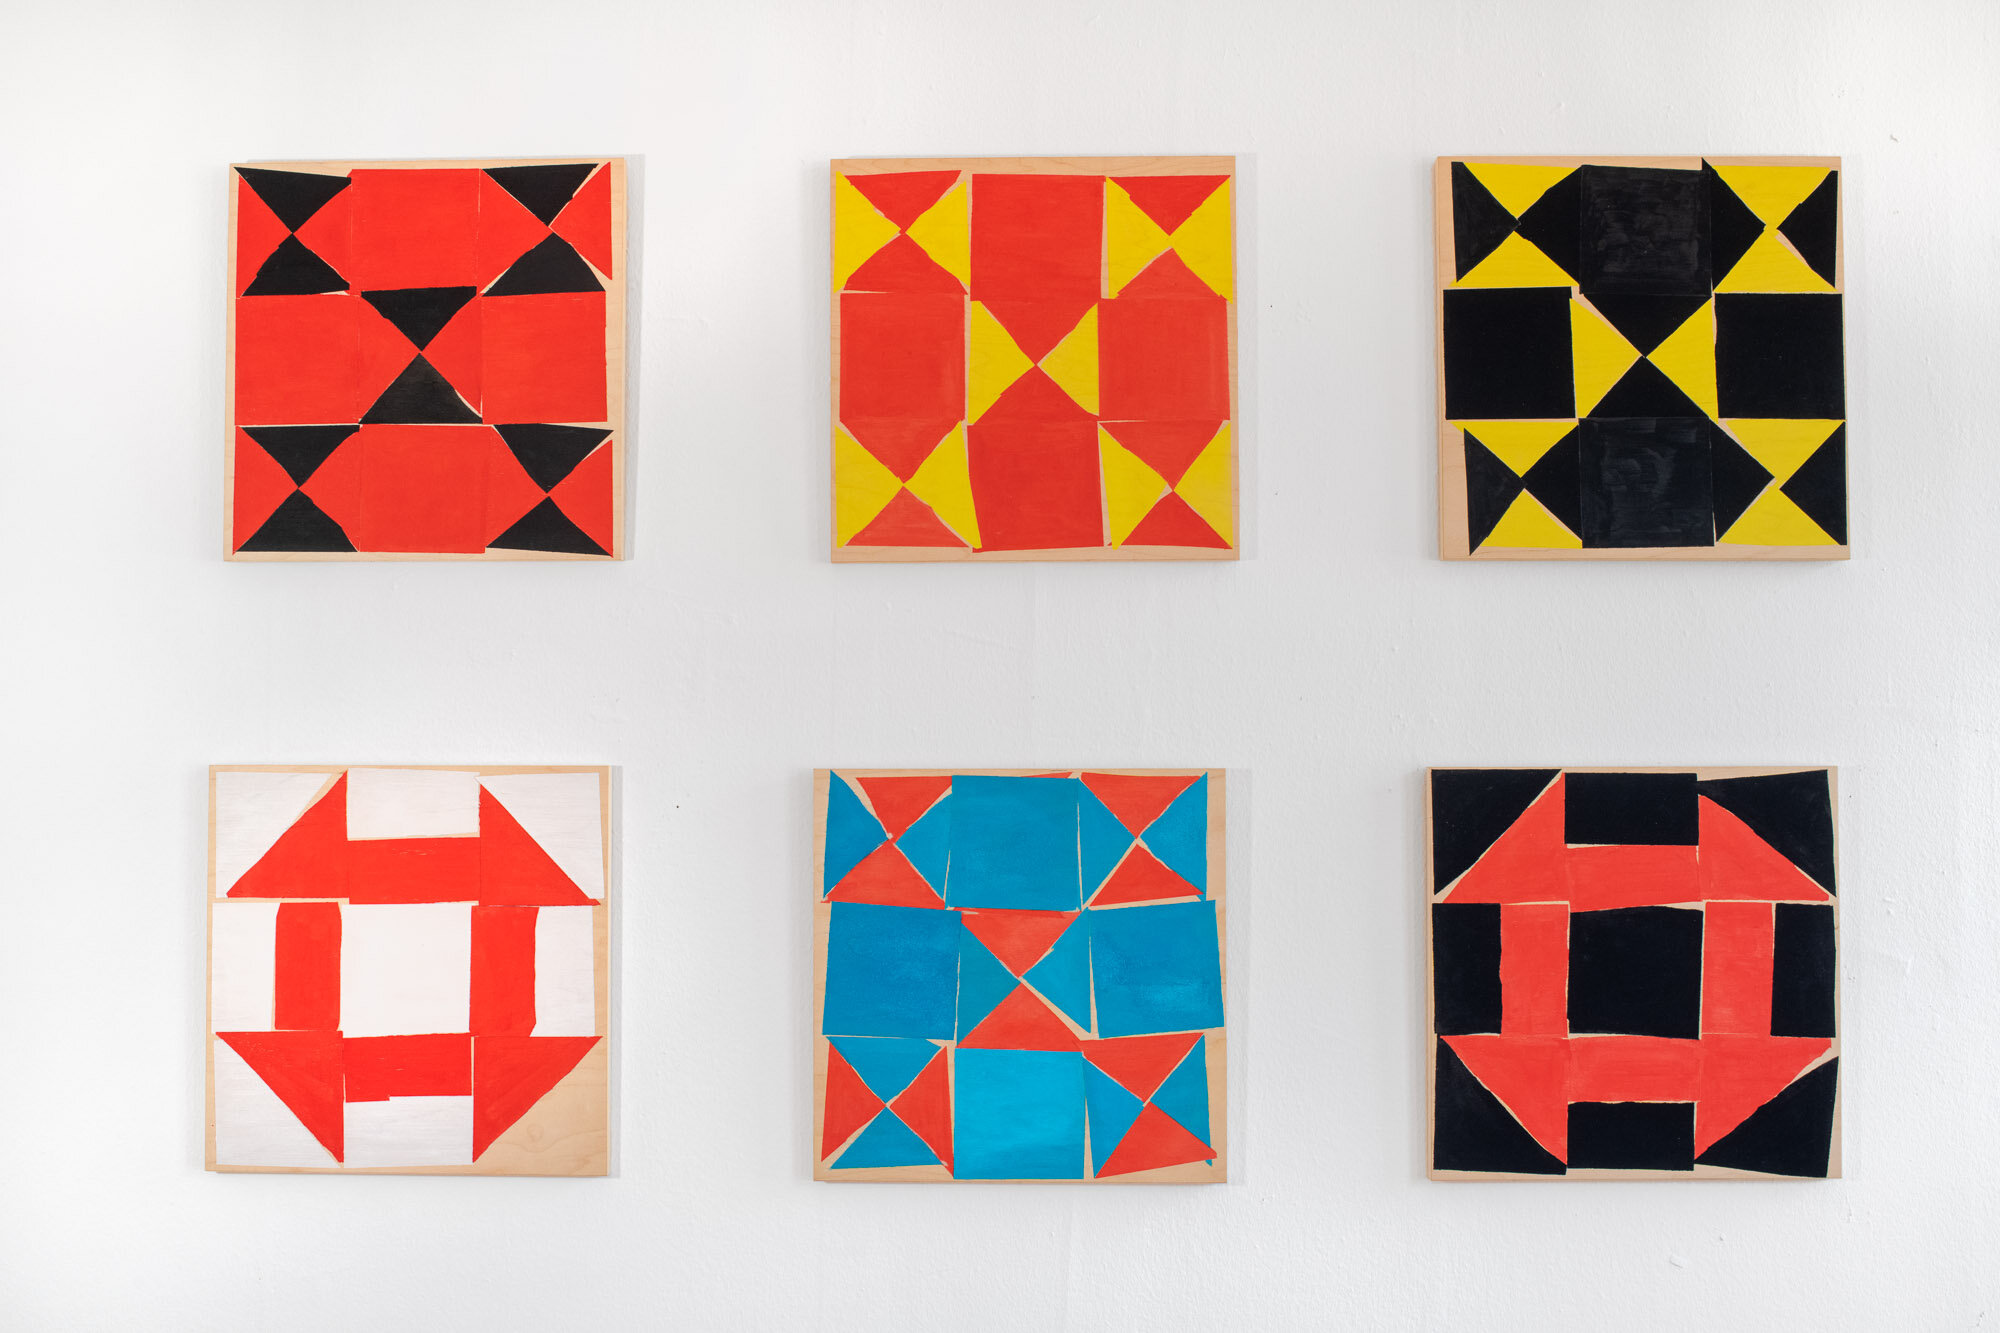  Brigitte Engler, Installation view:  objet mathématique (pédagogique) #18, #13, #5, #15, #7, and #9 , 2020 Gouache acrylique on birch plywood  12 x 12 in / 30.5 x 30.5 cm each  